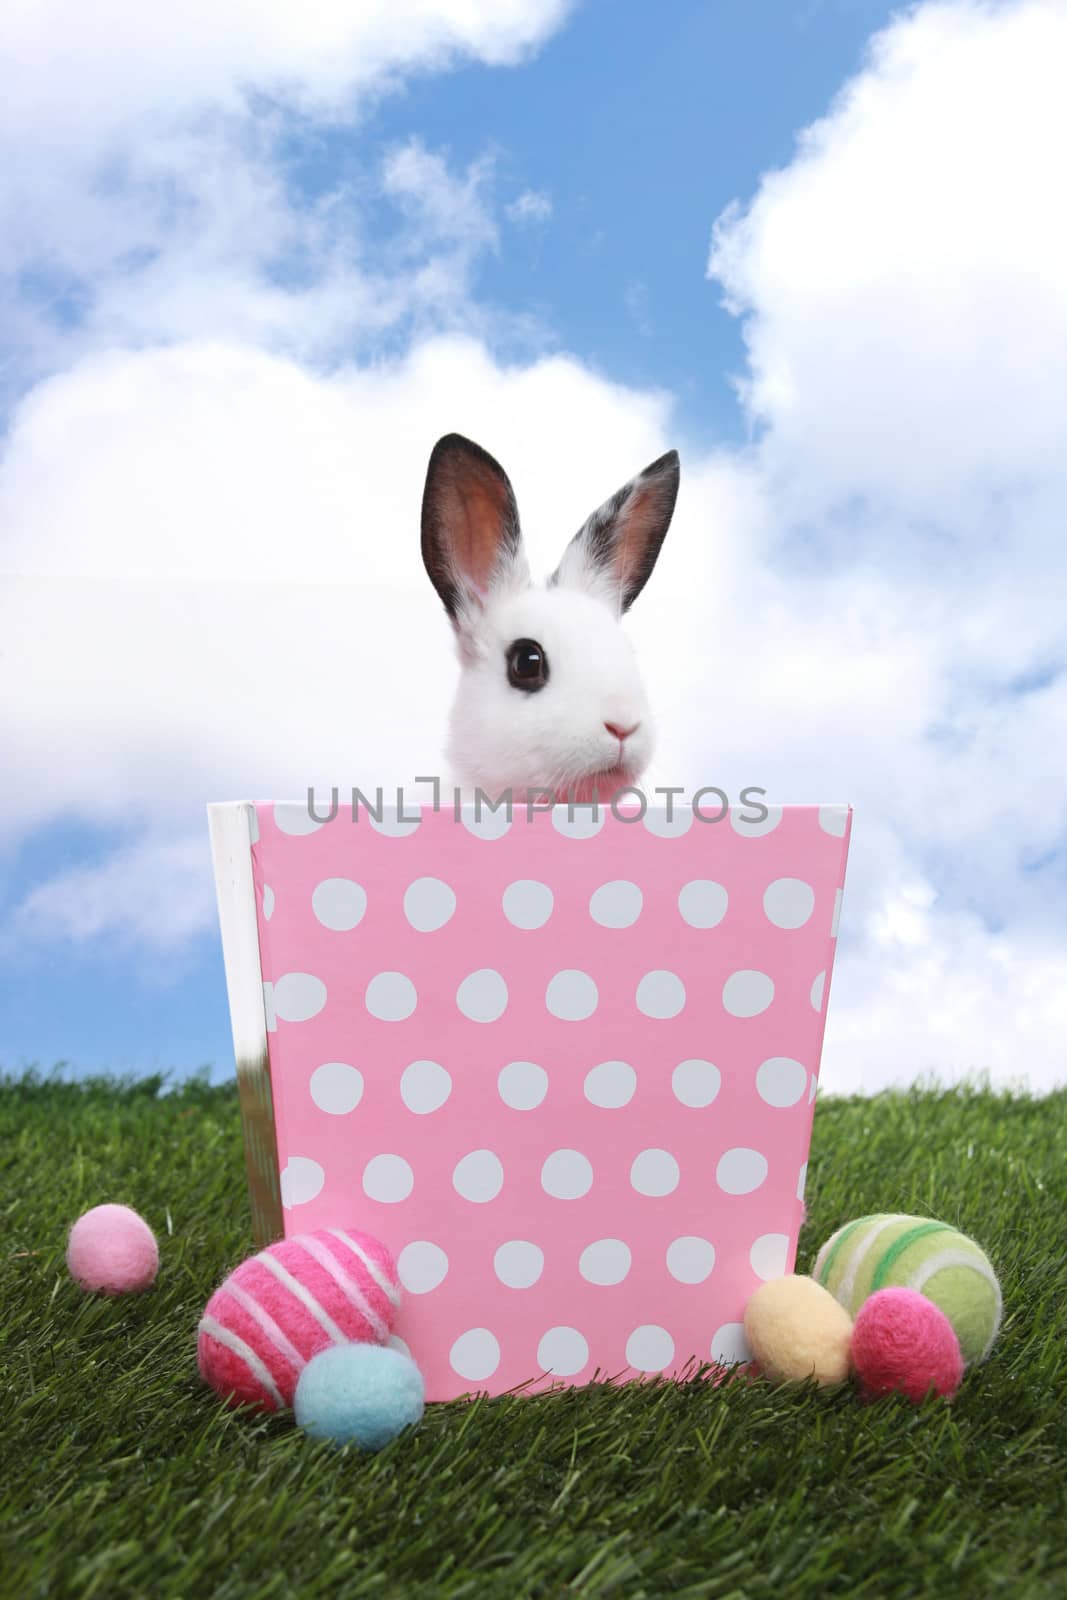 Adorable Little Bunny Rabbit in Pink Polka Dot Basket